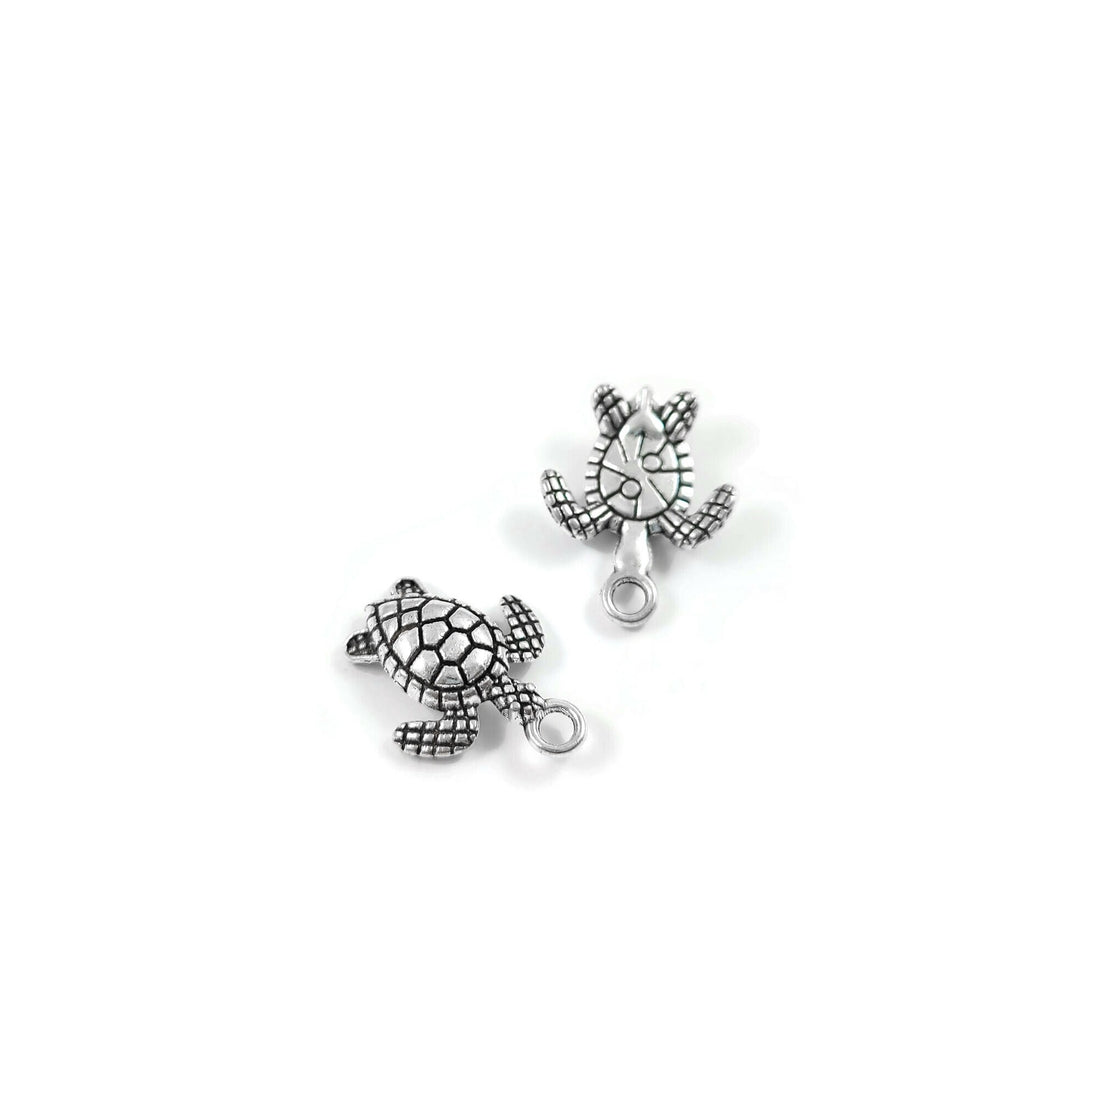 Cute sea turtle charms, 16mm nickel free metal pendants, Hypoallergenic jewelry making